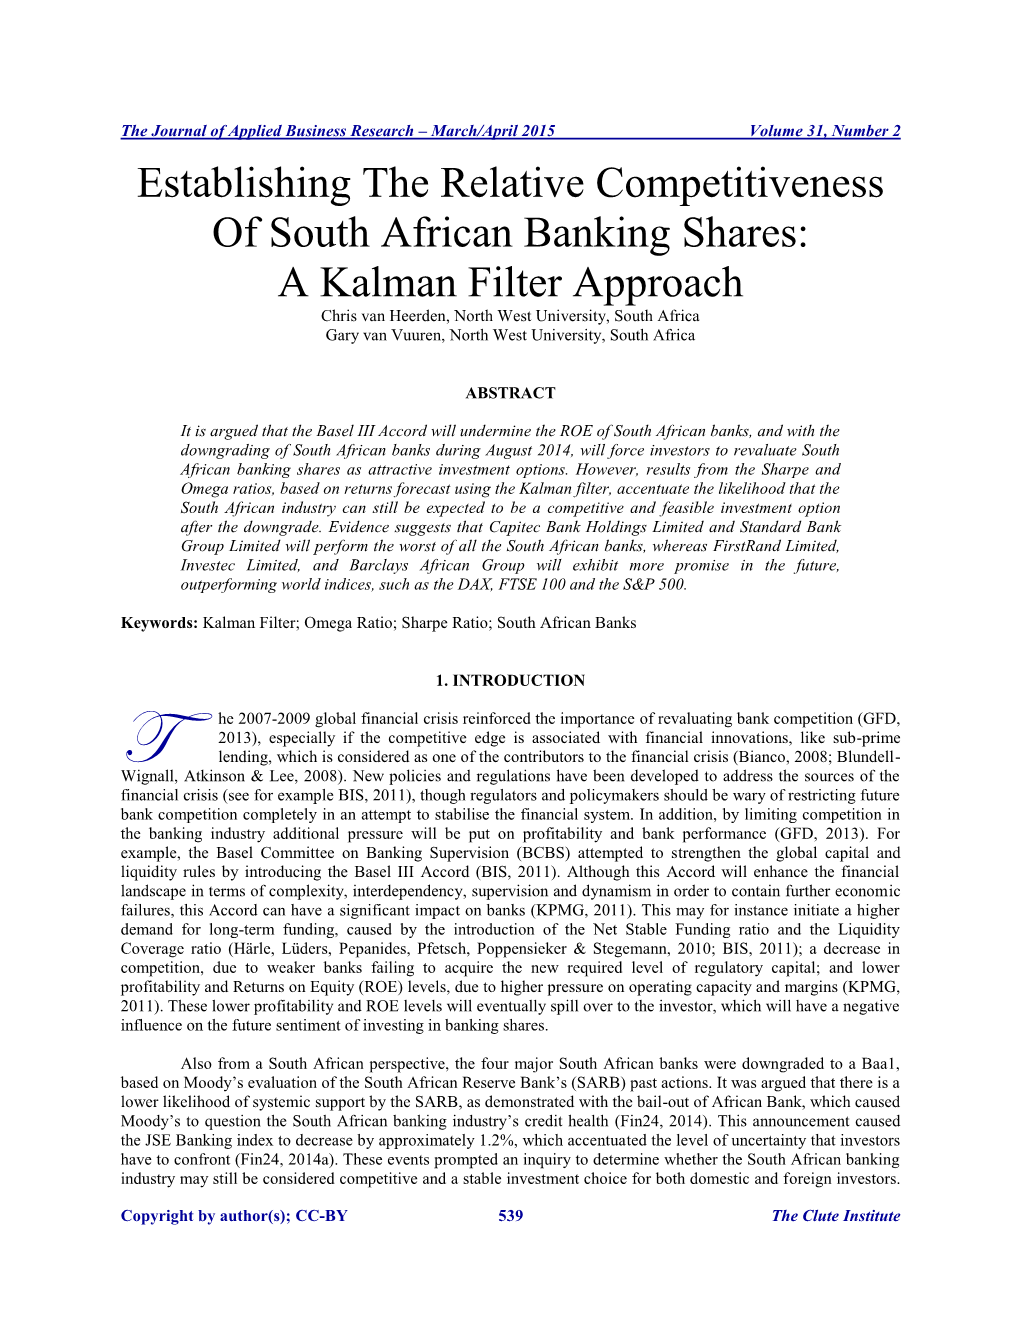 Establishing the Relative Competitiveness Of